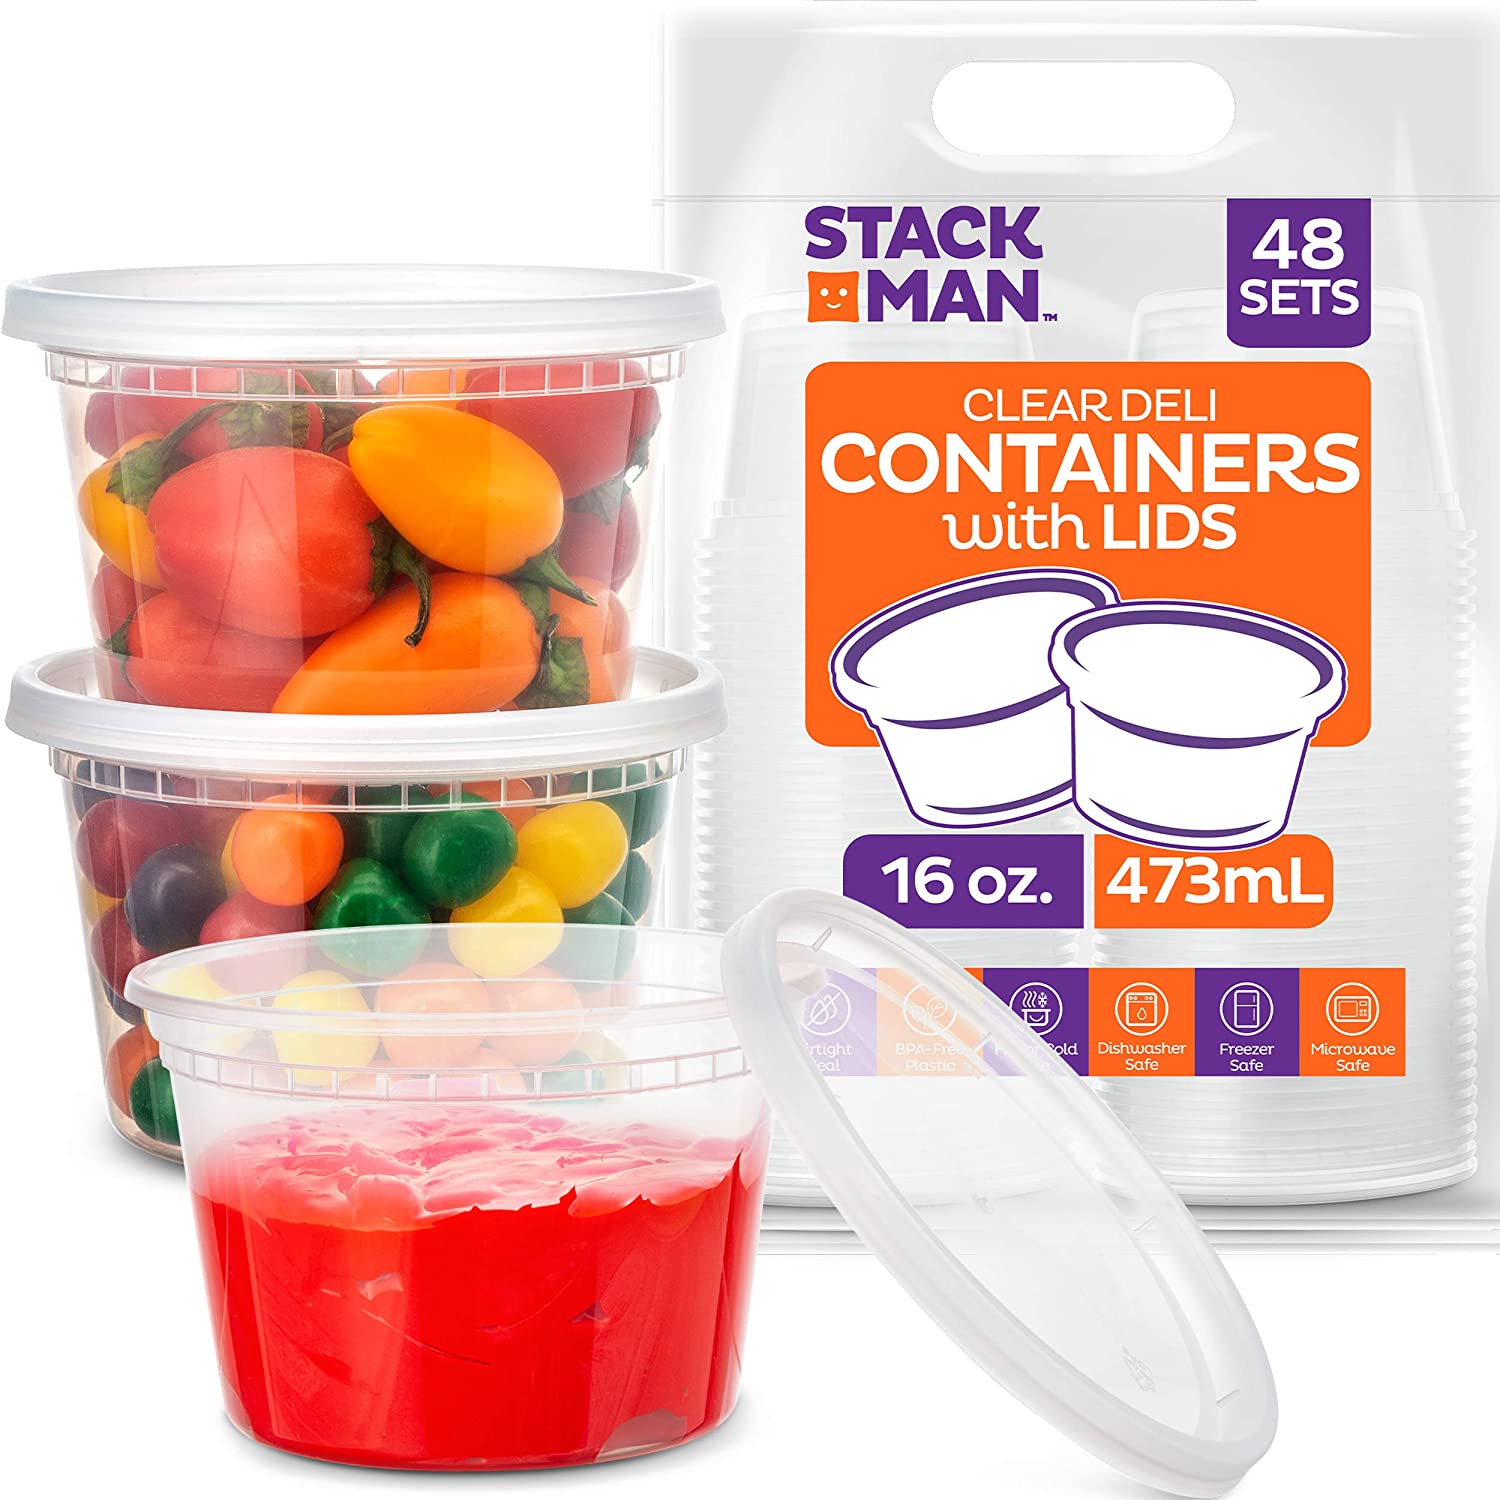 https://www.dontwasteyourmoney.com/wp-content/uploads/2022/01/stack-man-freezer-safe-plastic-soup-containers-with-lids-48-sets-plastic-soup-containers-with-lids.jpg